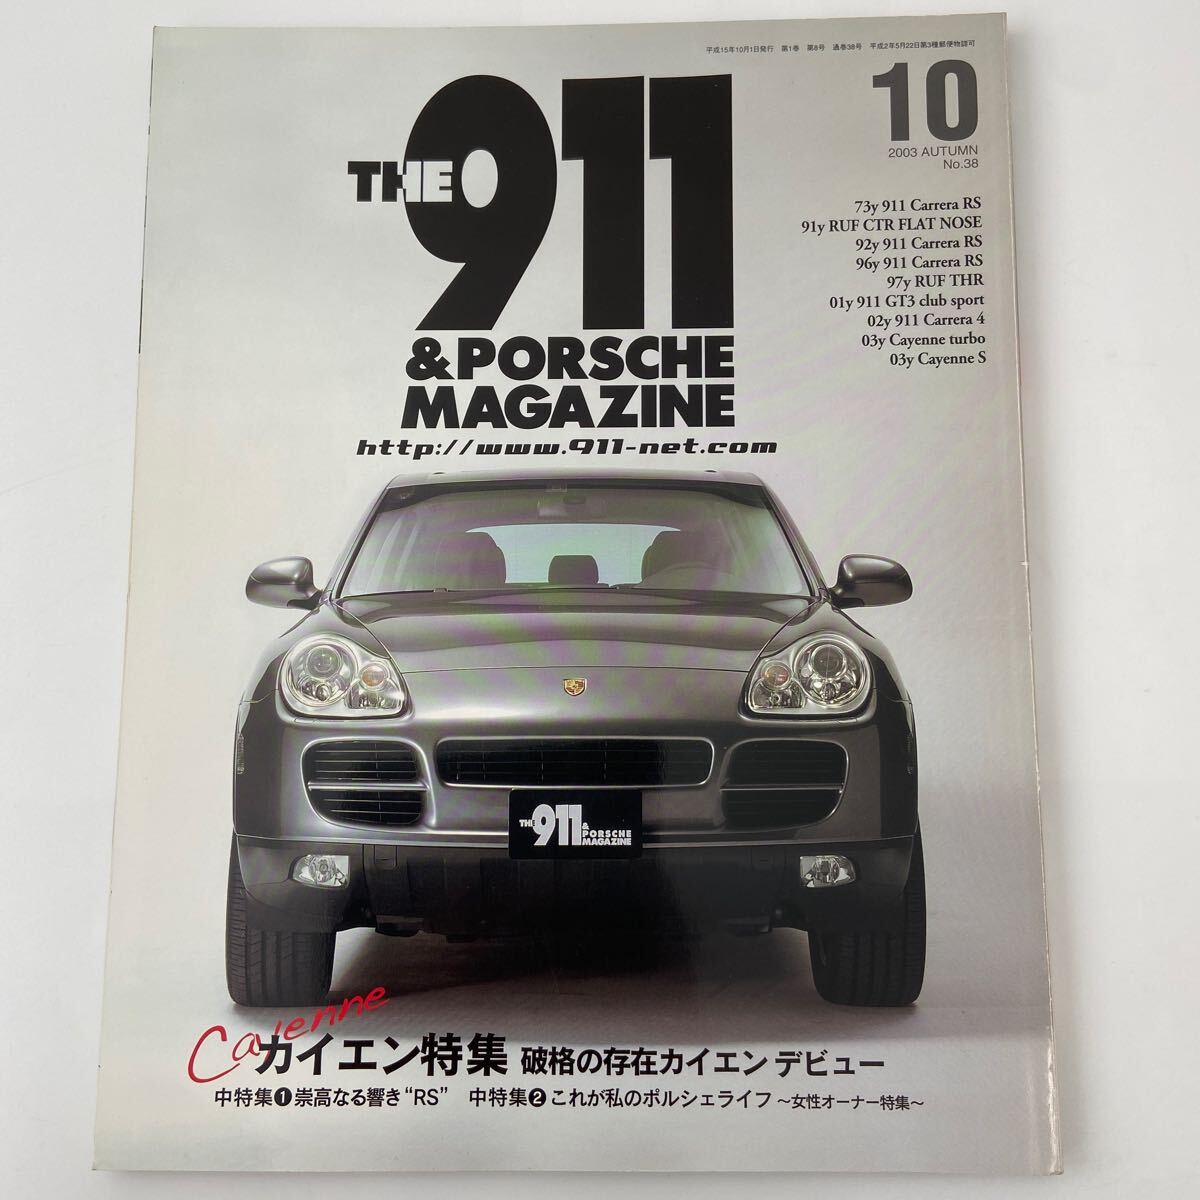 THE 911 PORSCHE MAGAZINE #38 特集 初代 カイエン ポルシェ マガジン 本の画像1